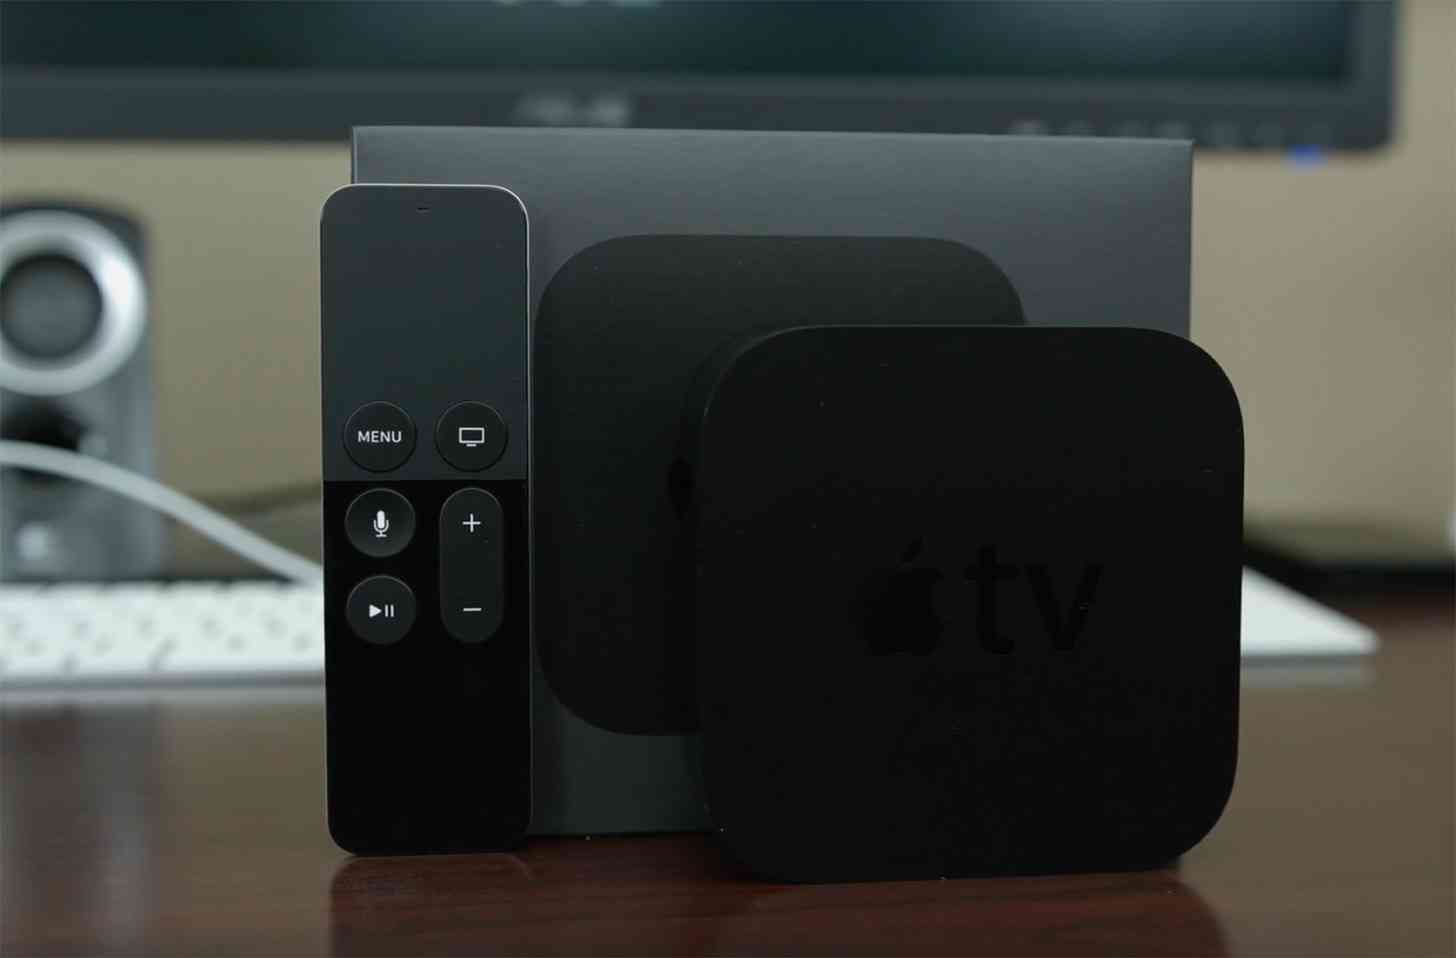 Apple TV hands-on video